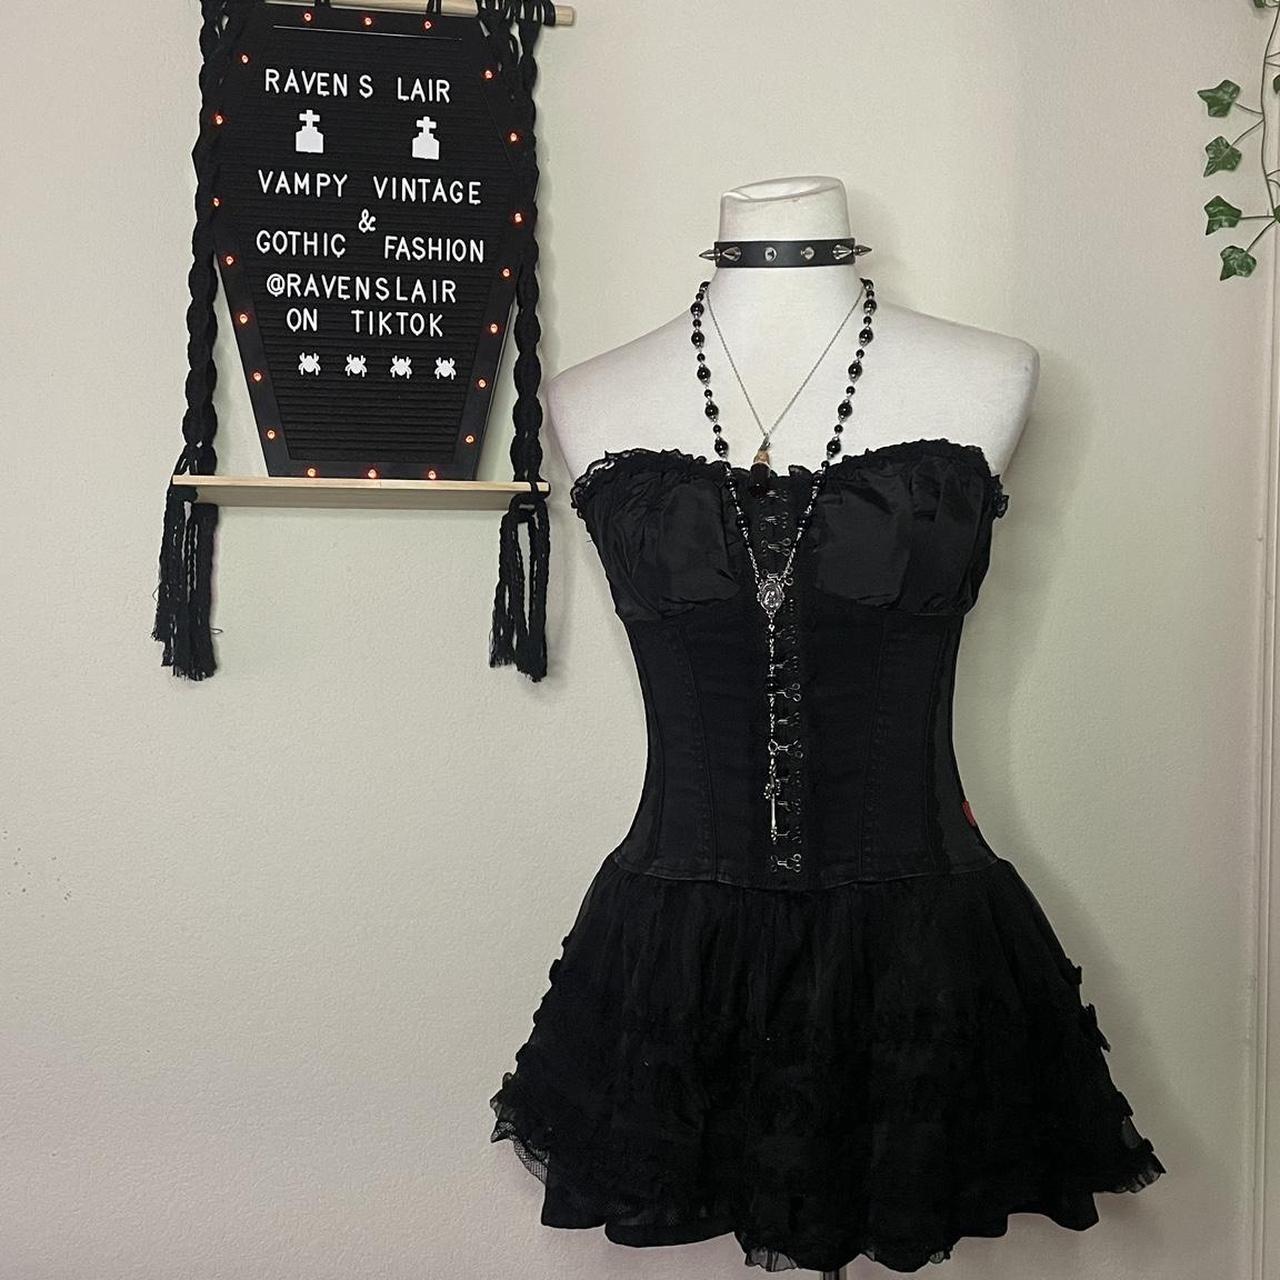 Royal Bones Black Tutu Dress  Tripp nyc dress, Outfits, Goth outfits